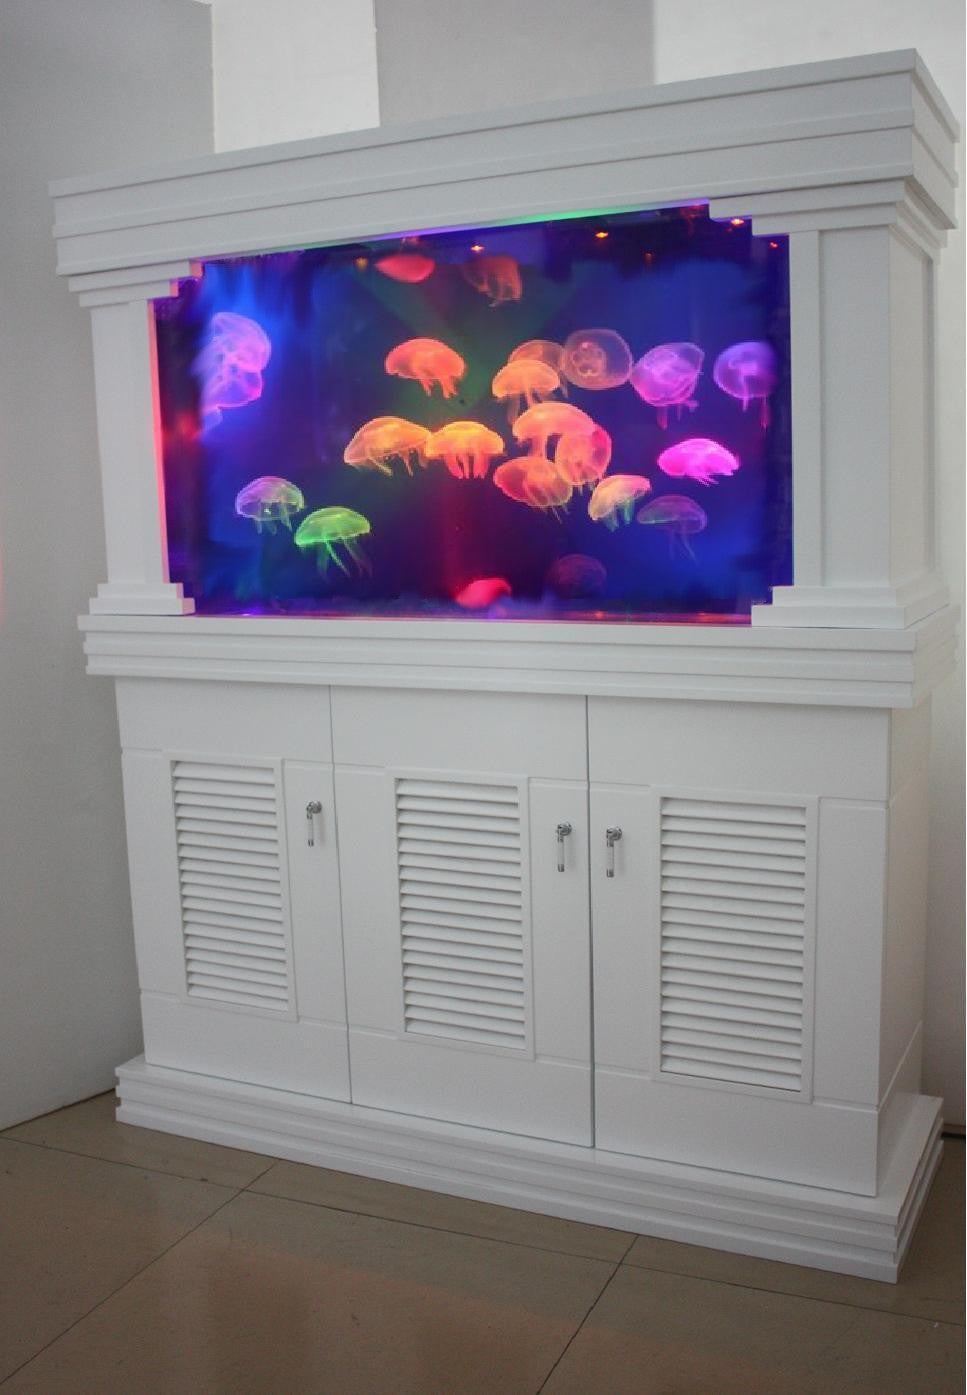 RARE JELLYFISH AQUARIUM 80 gallon aquarium fish tank w/ filter for jellyfish